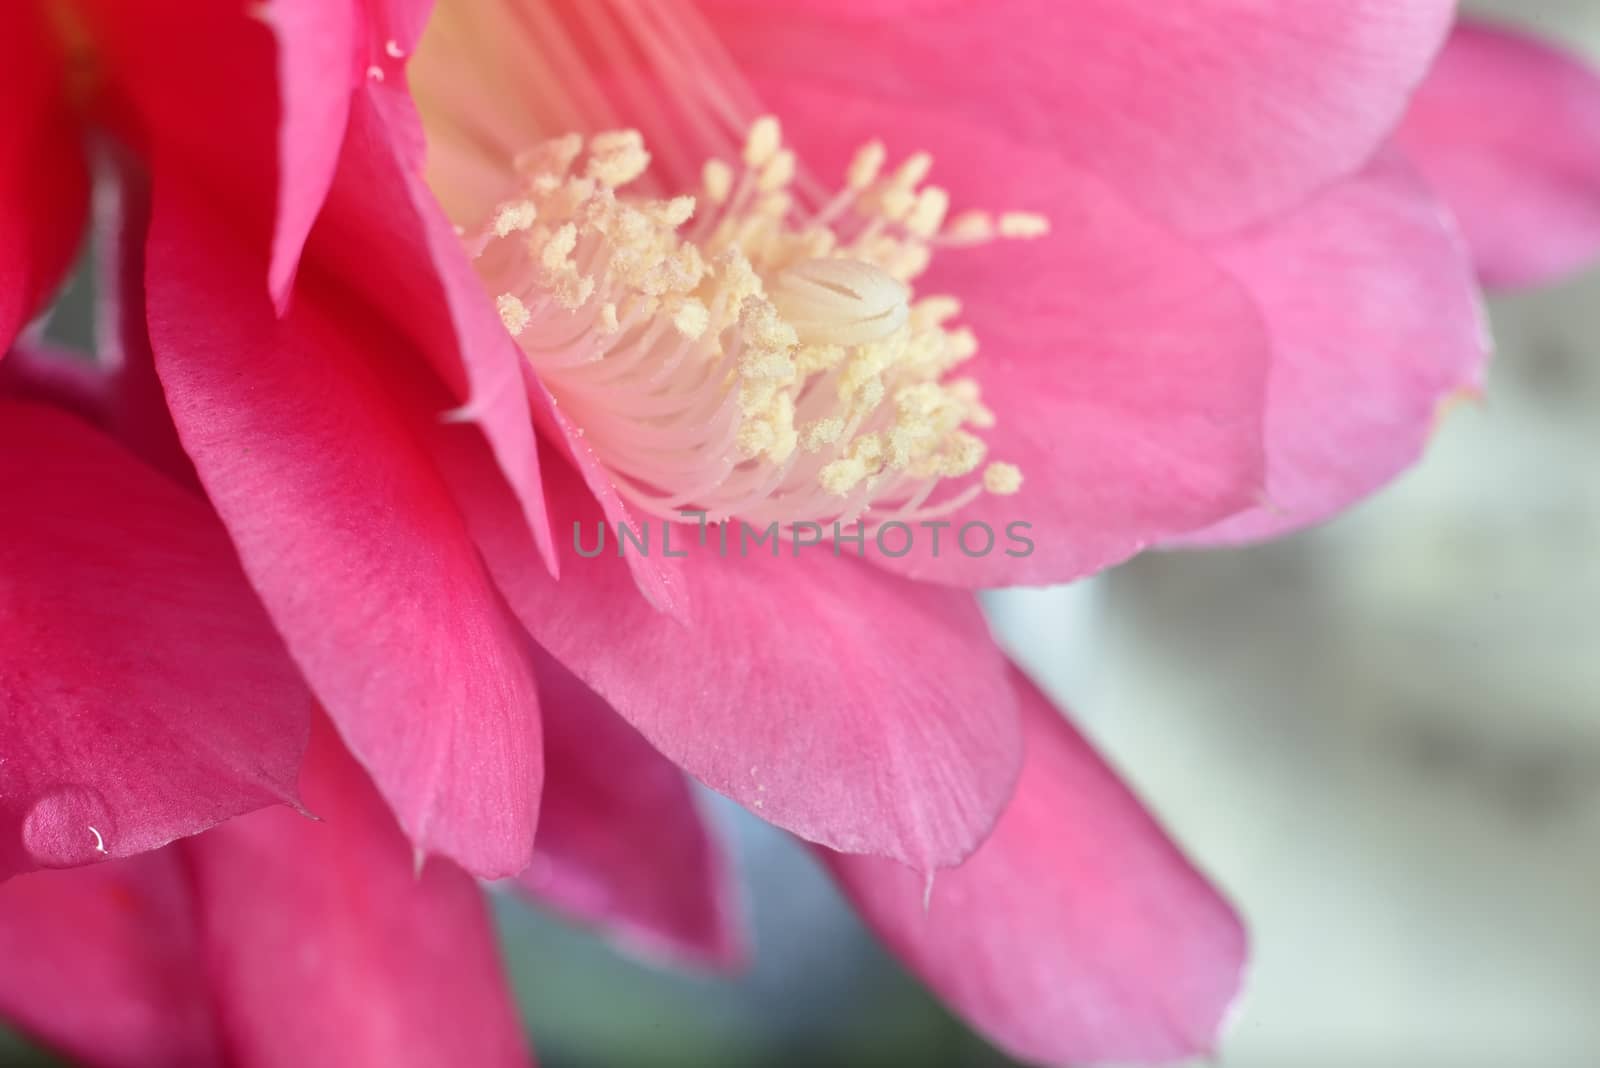 inside pink flower (macro extazoomed flower with pollen on pestils )